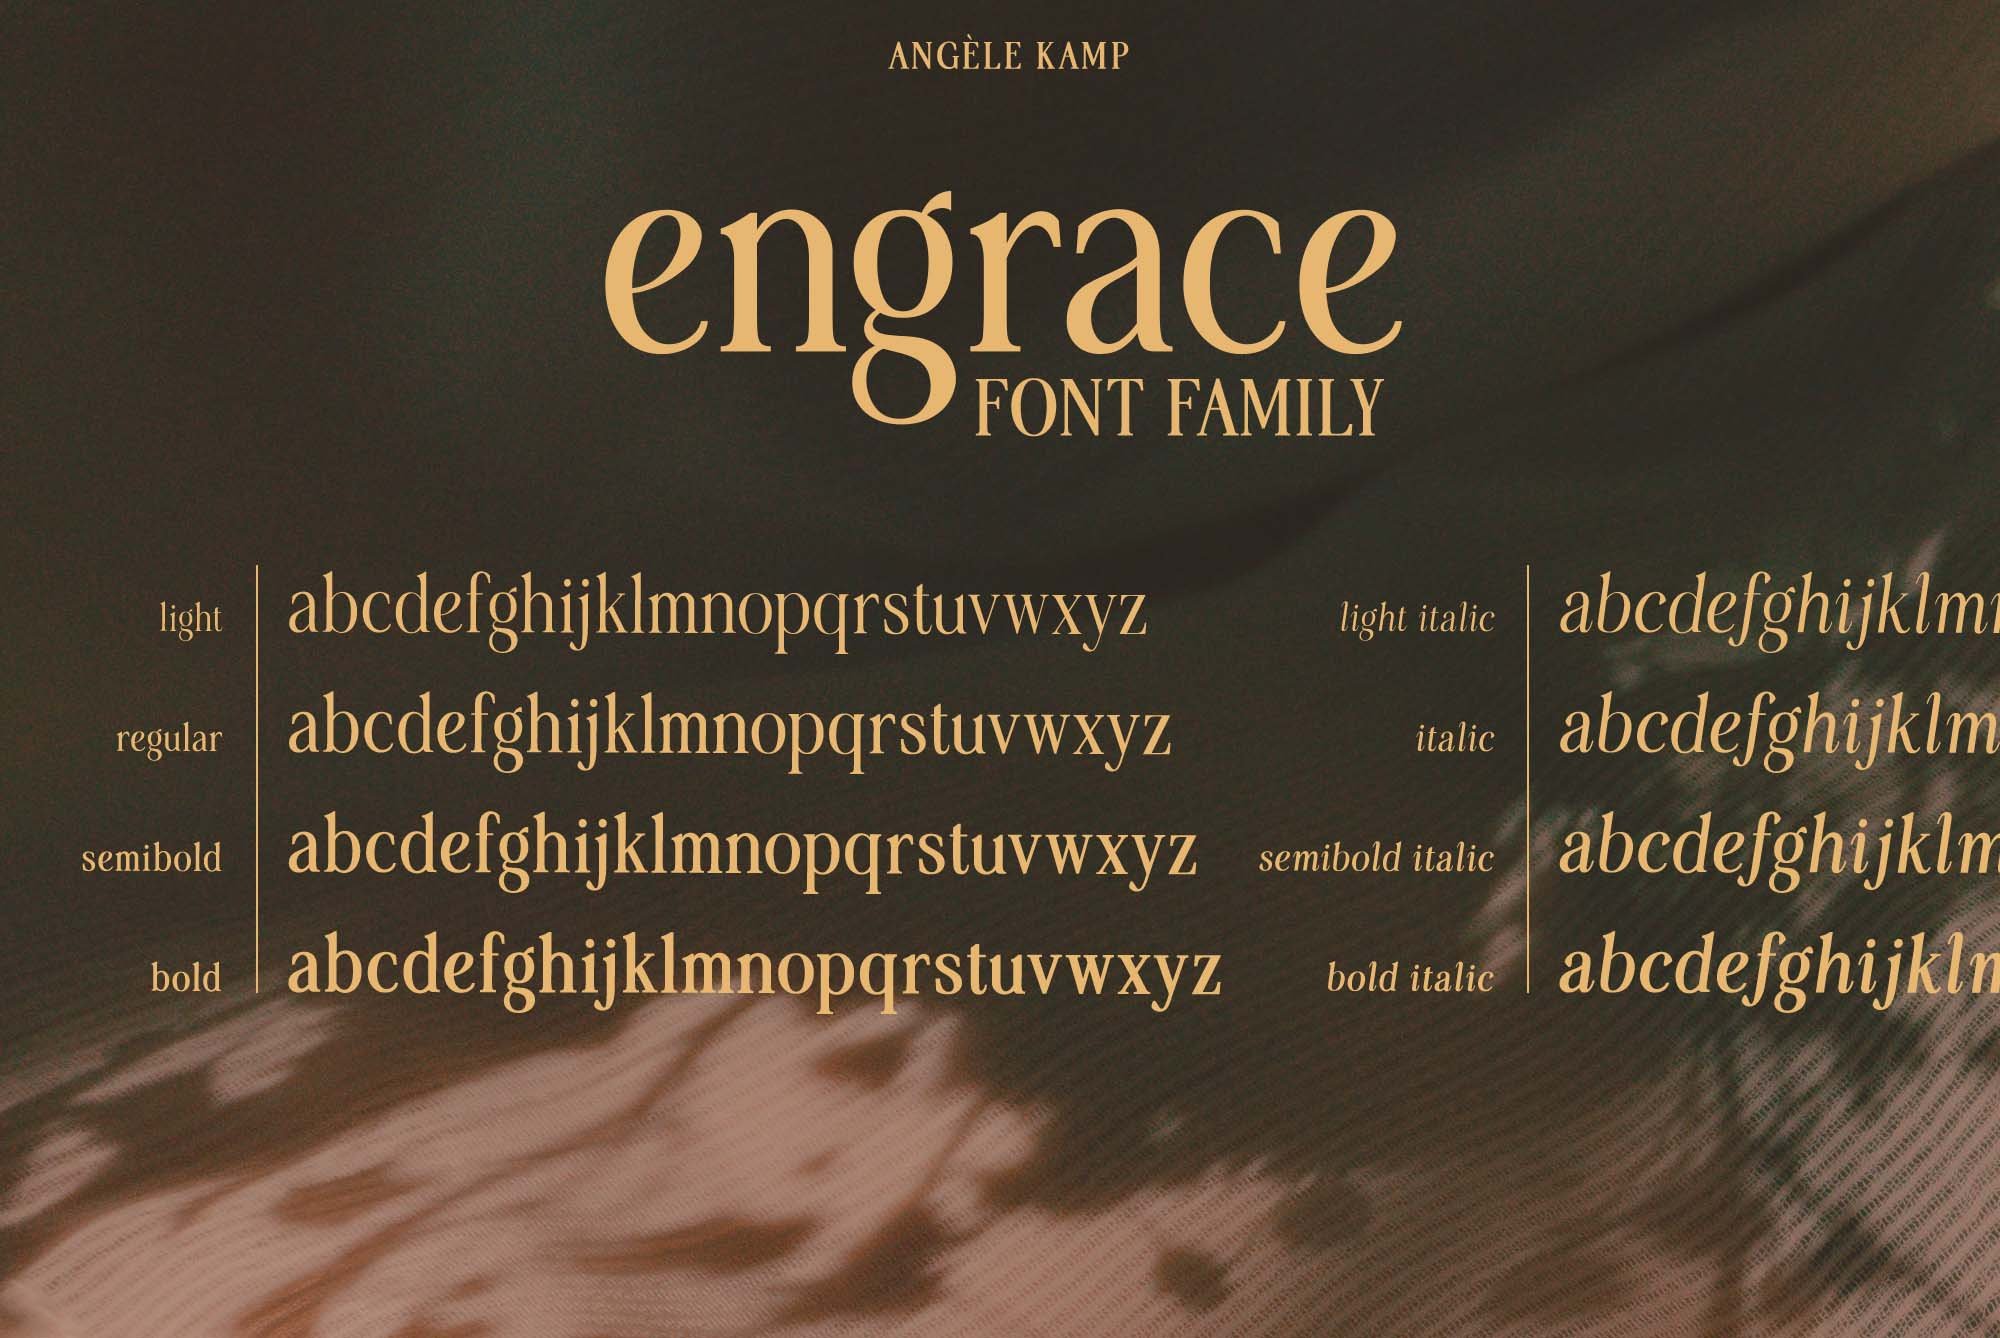 engrace serif font family angele kamp10 157